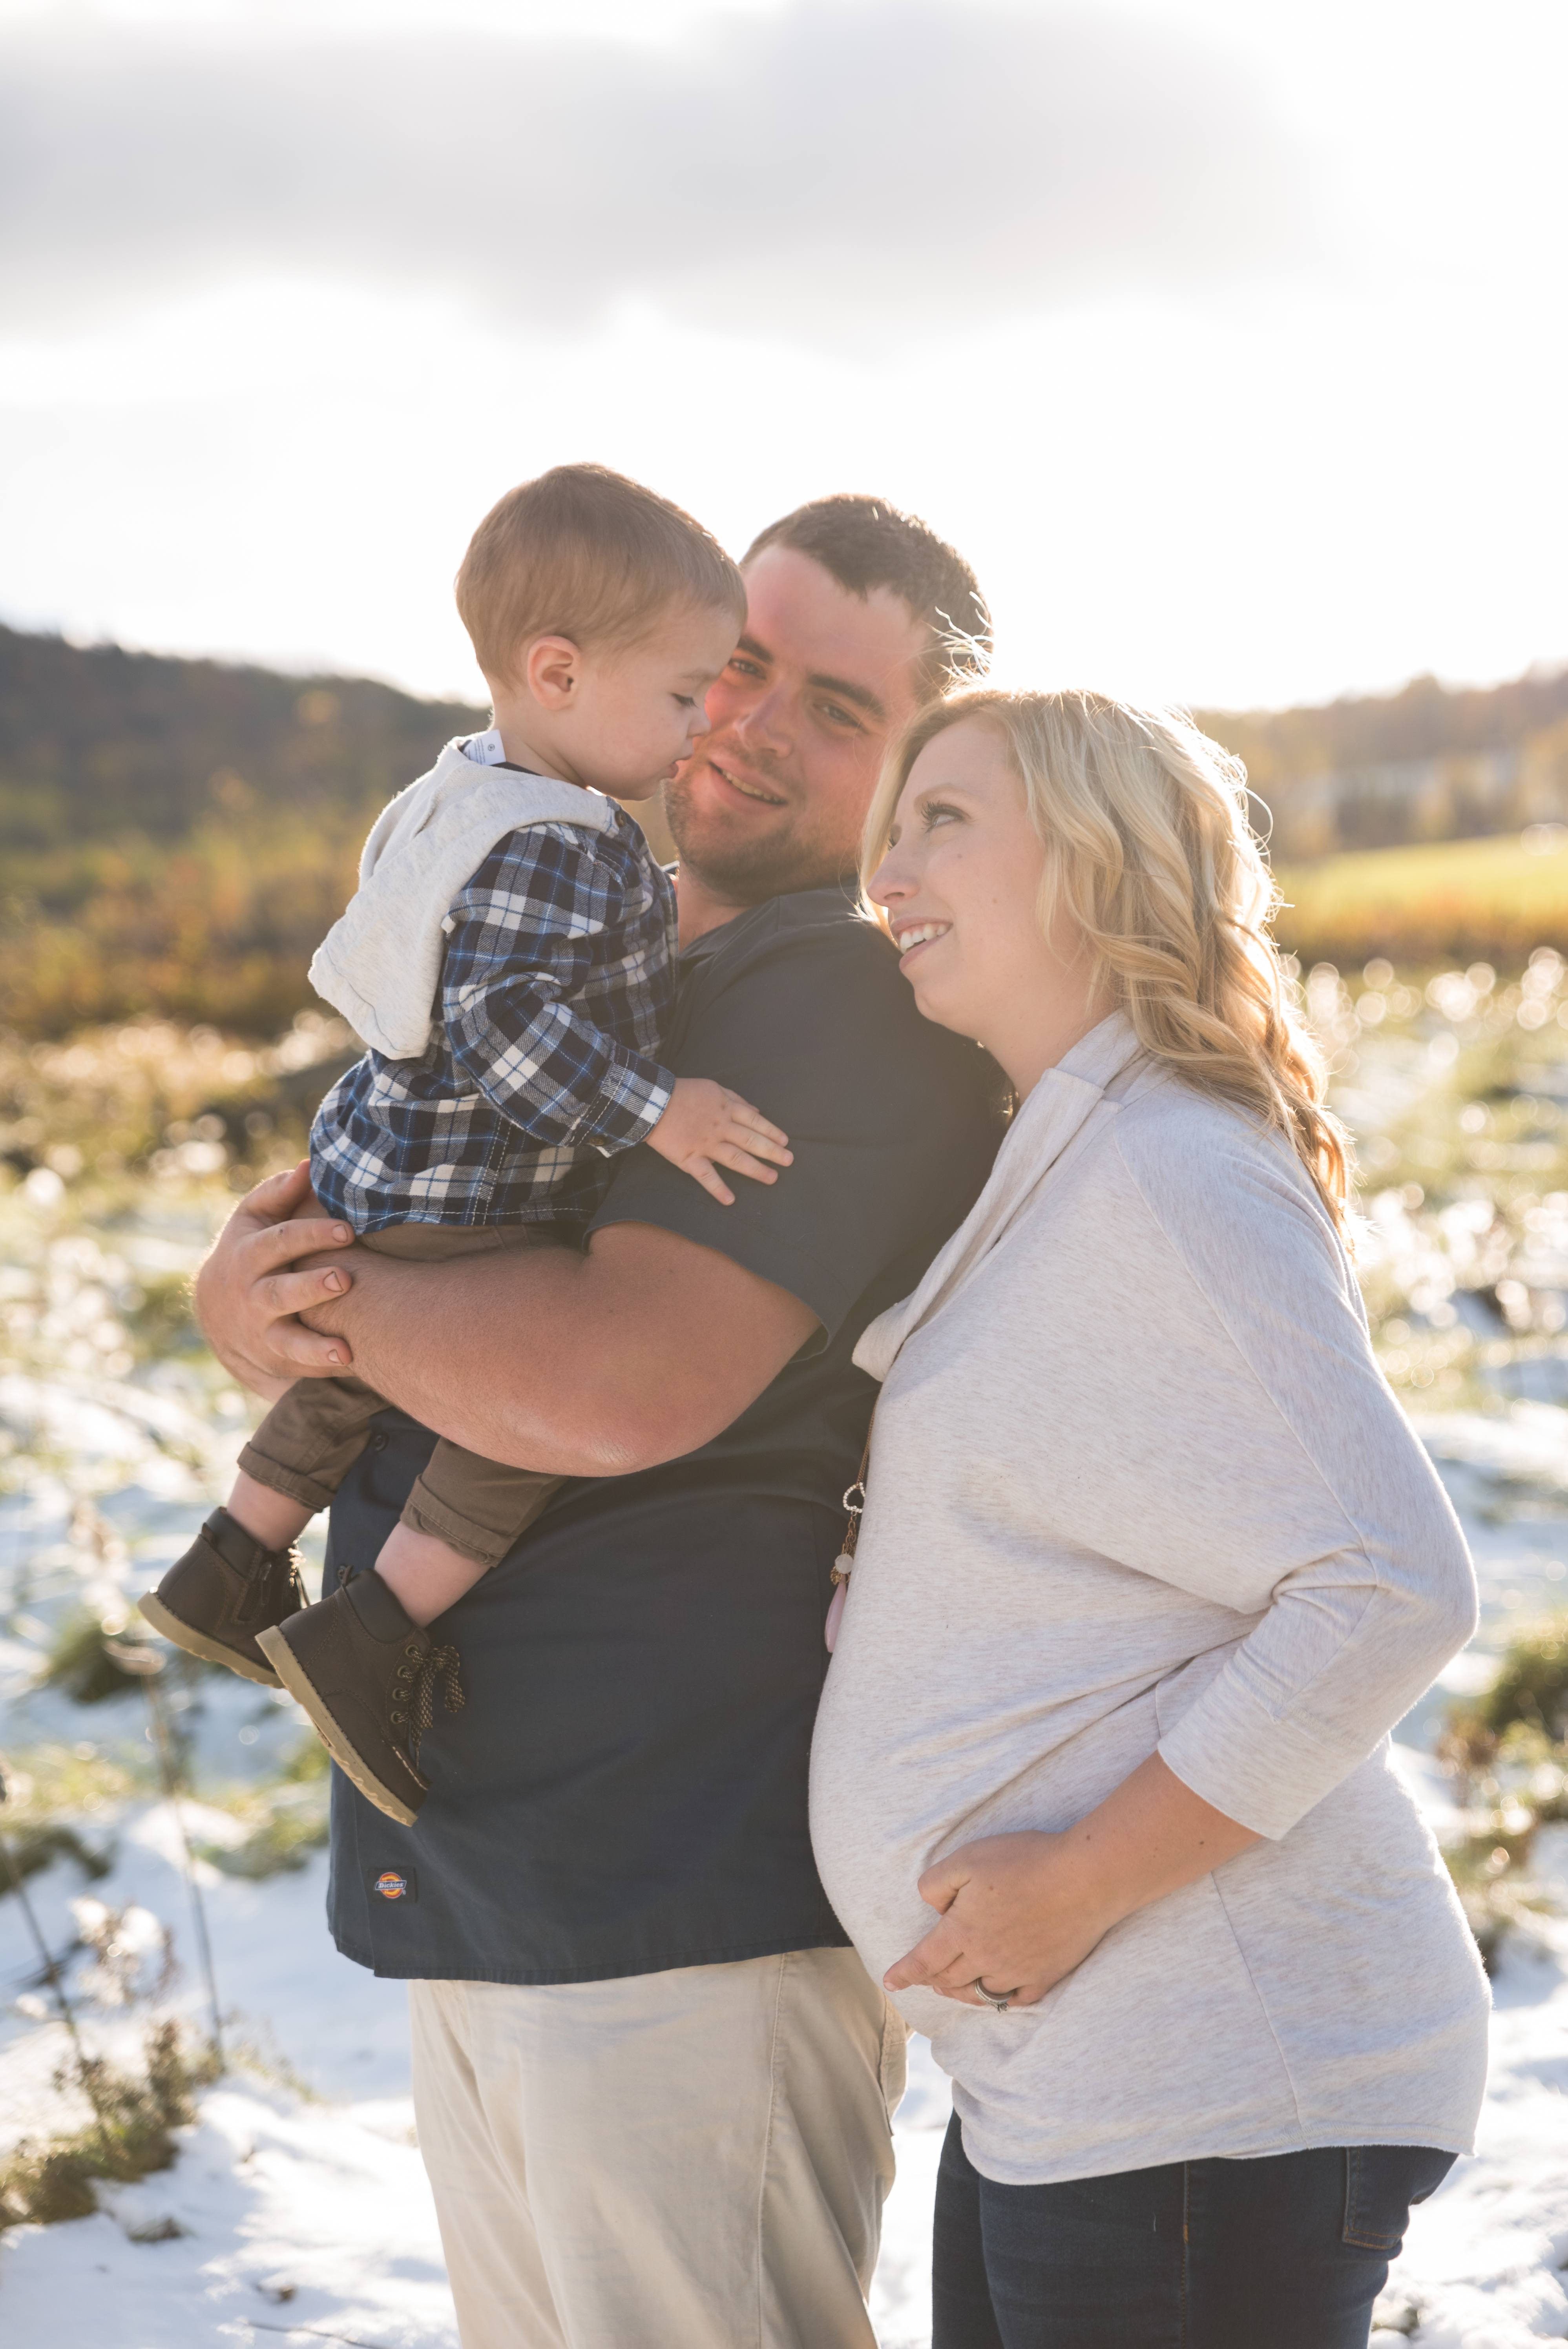 New Hampshire Maternity Photographer 5 - Portfolio: Maternity